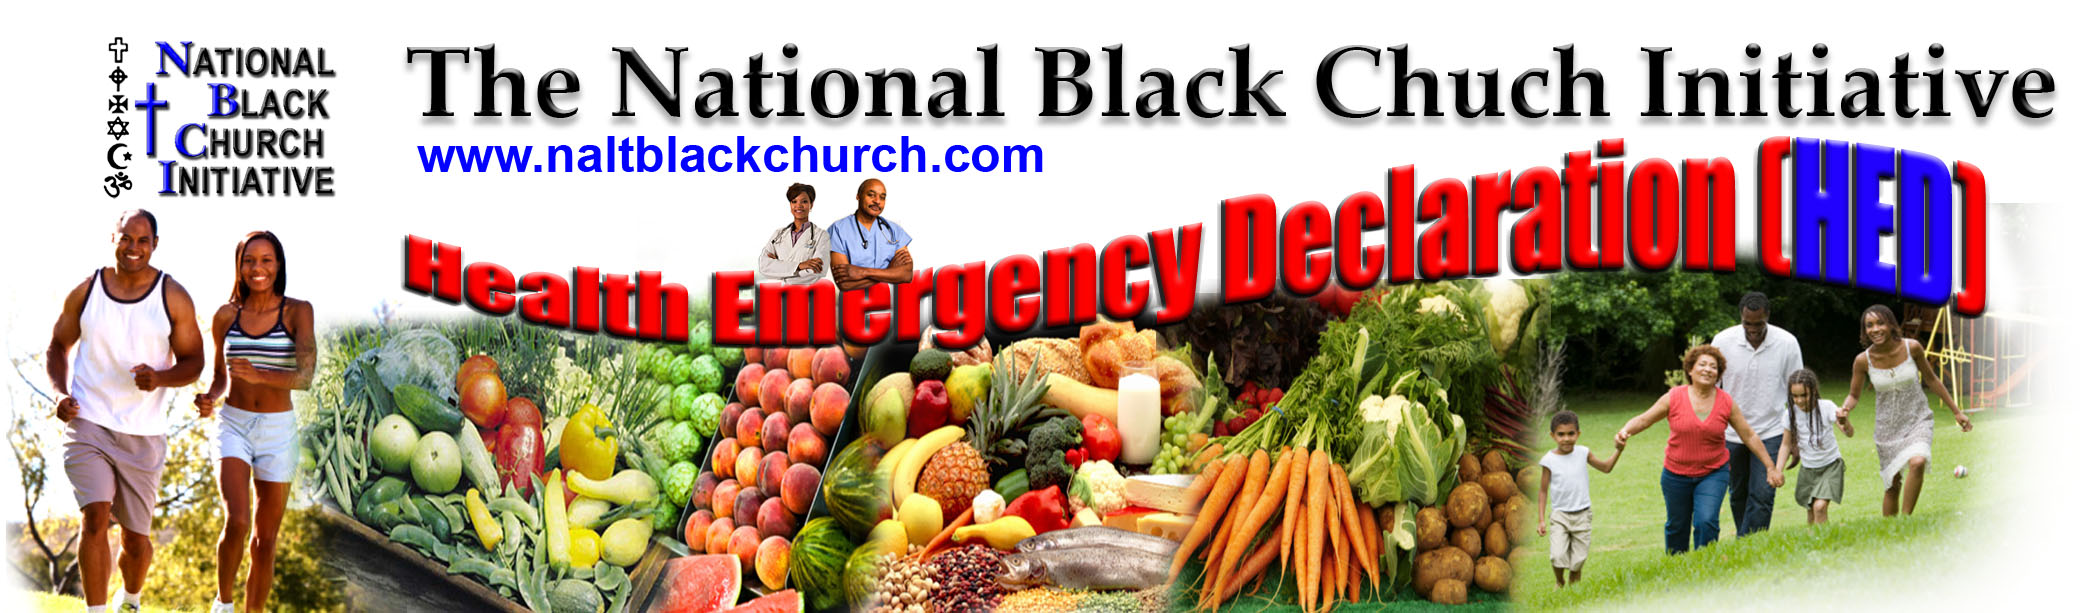 The National Black Church Initiative Health Emergency Declaration